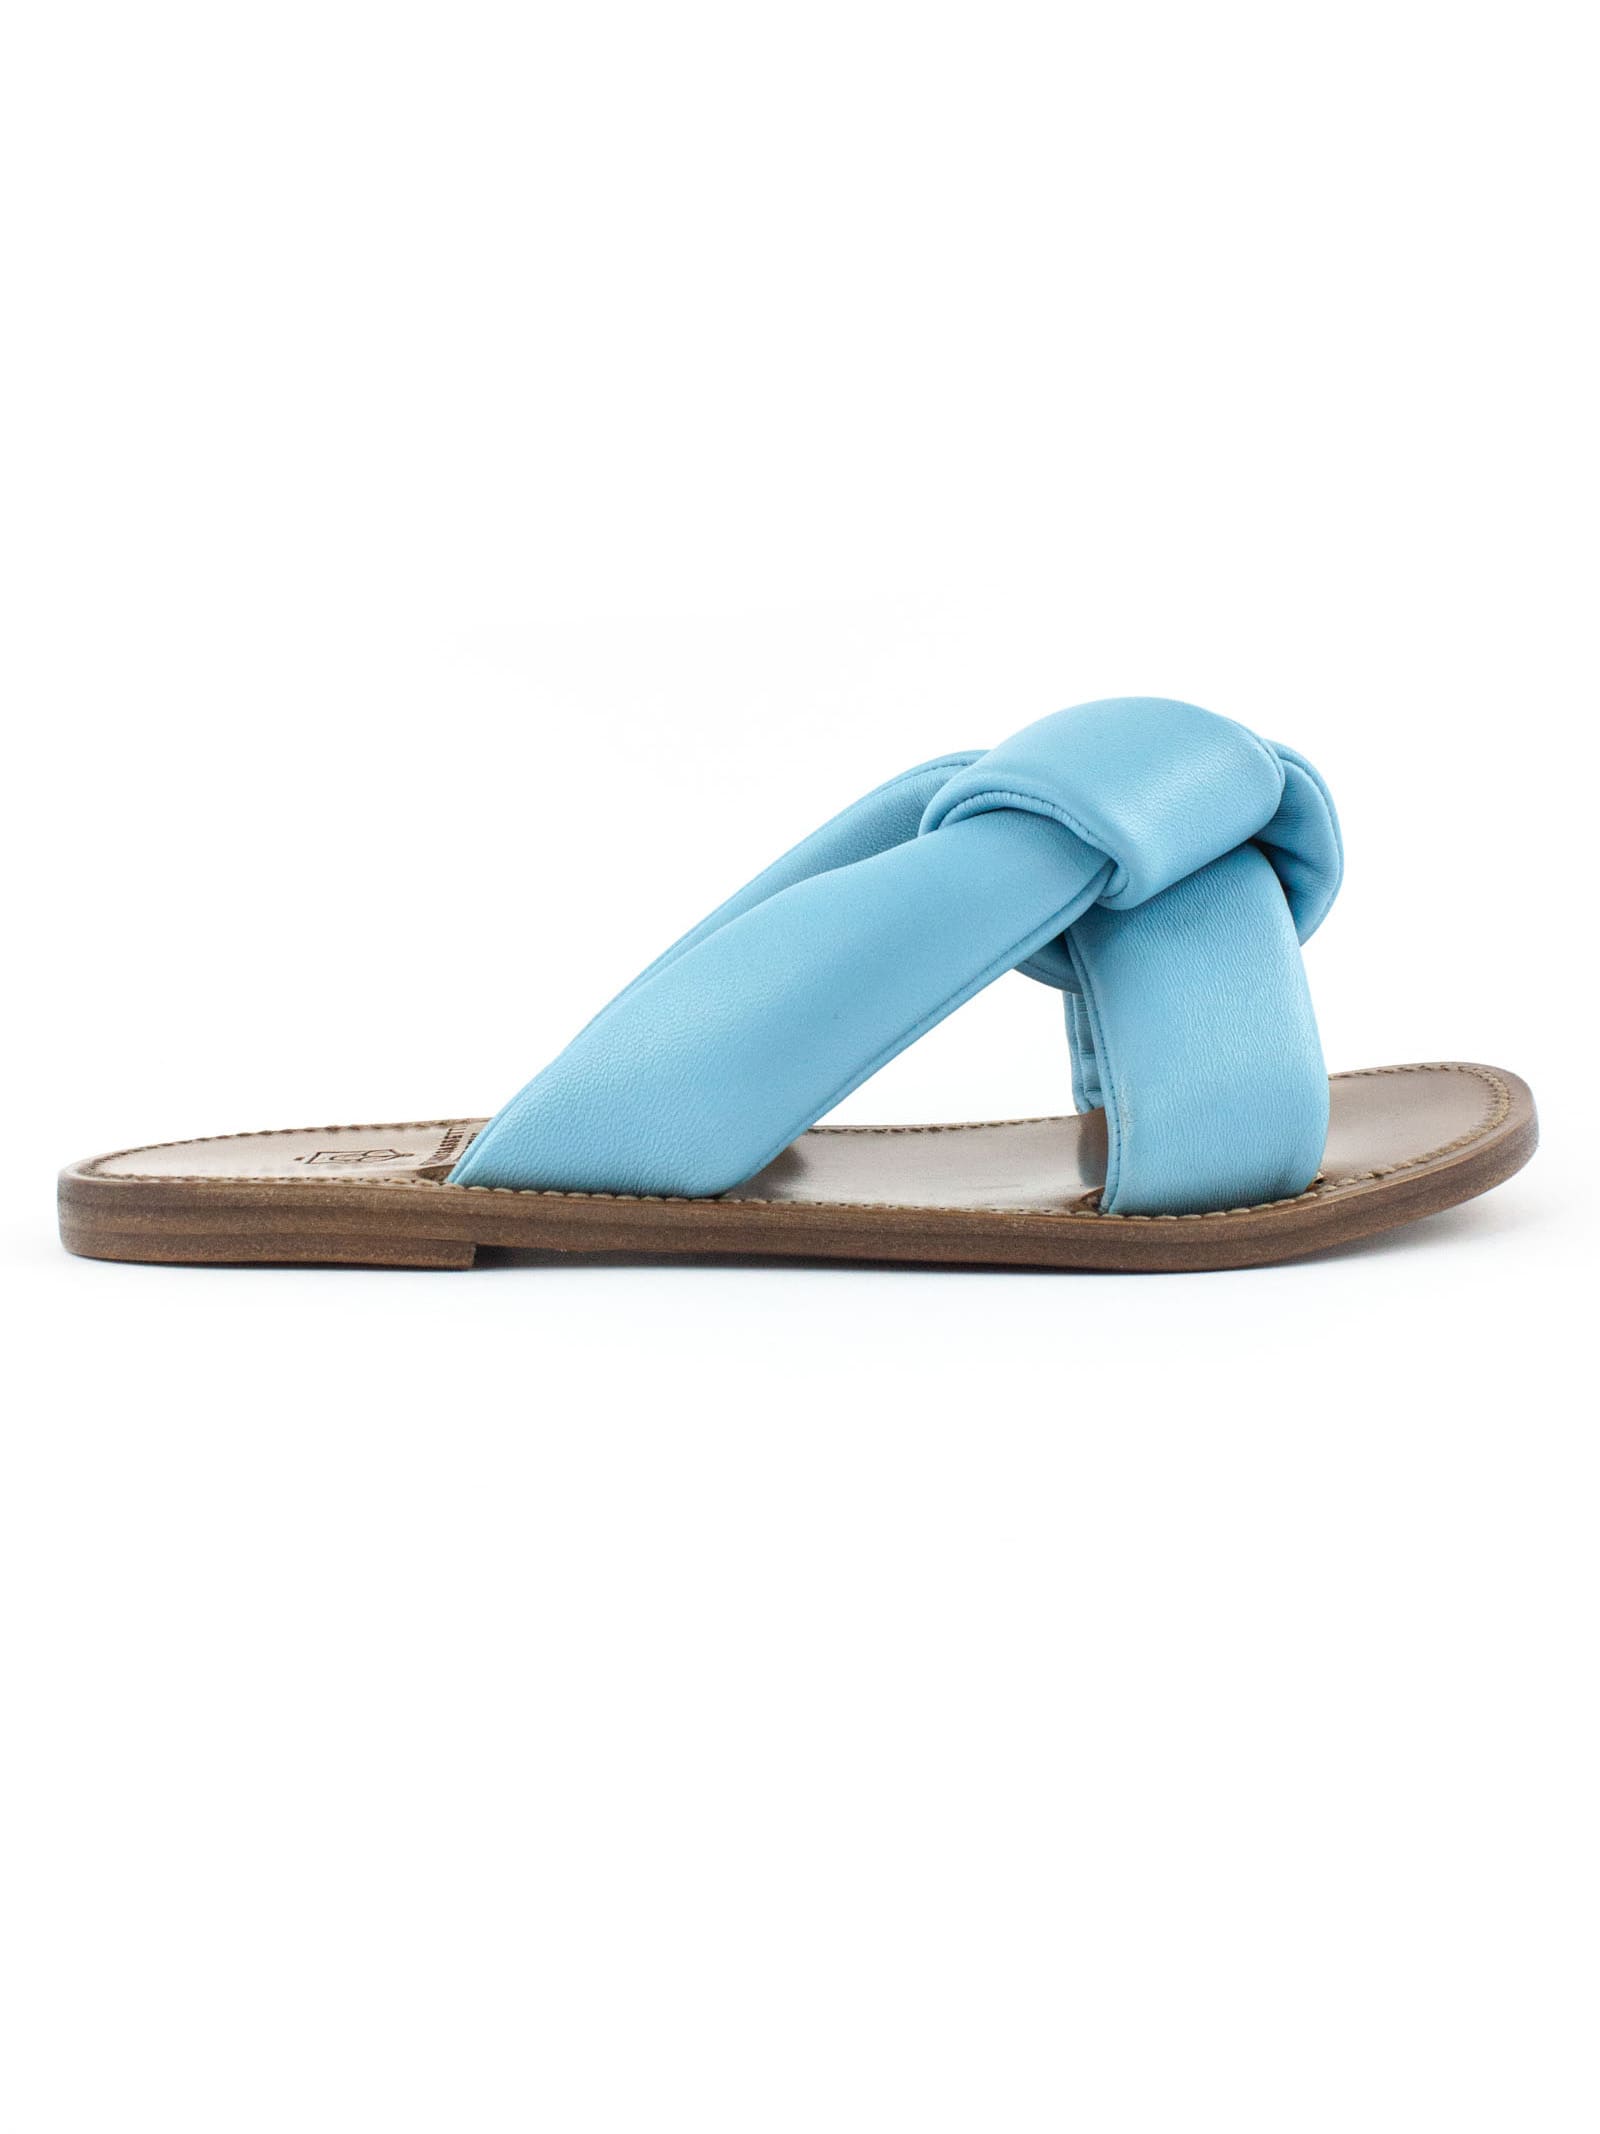 Silvano Sassetti Light Blue Leather Low Sandals